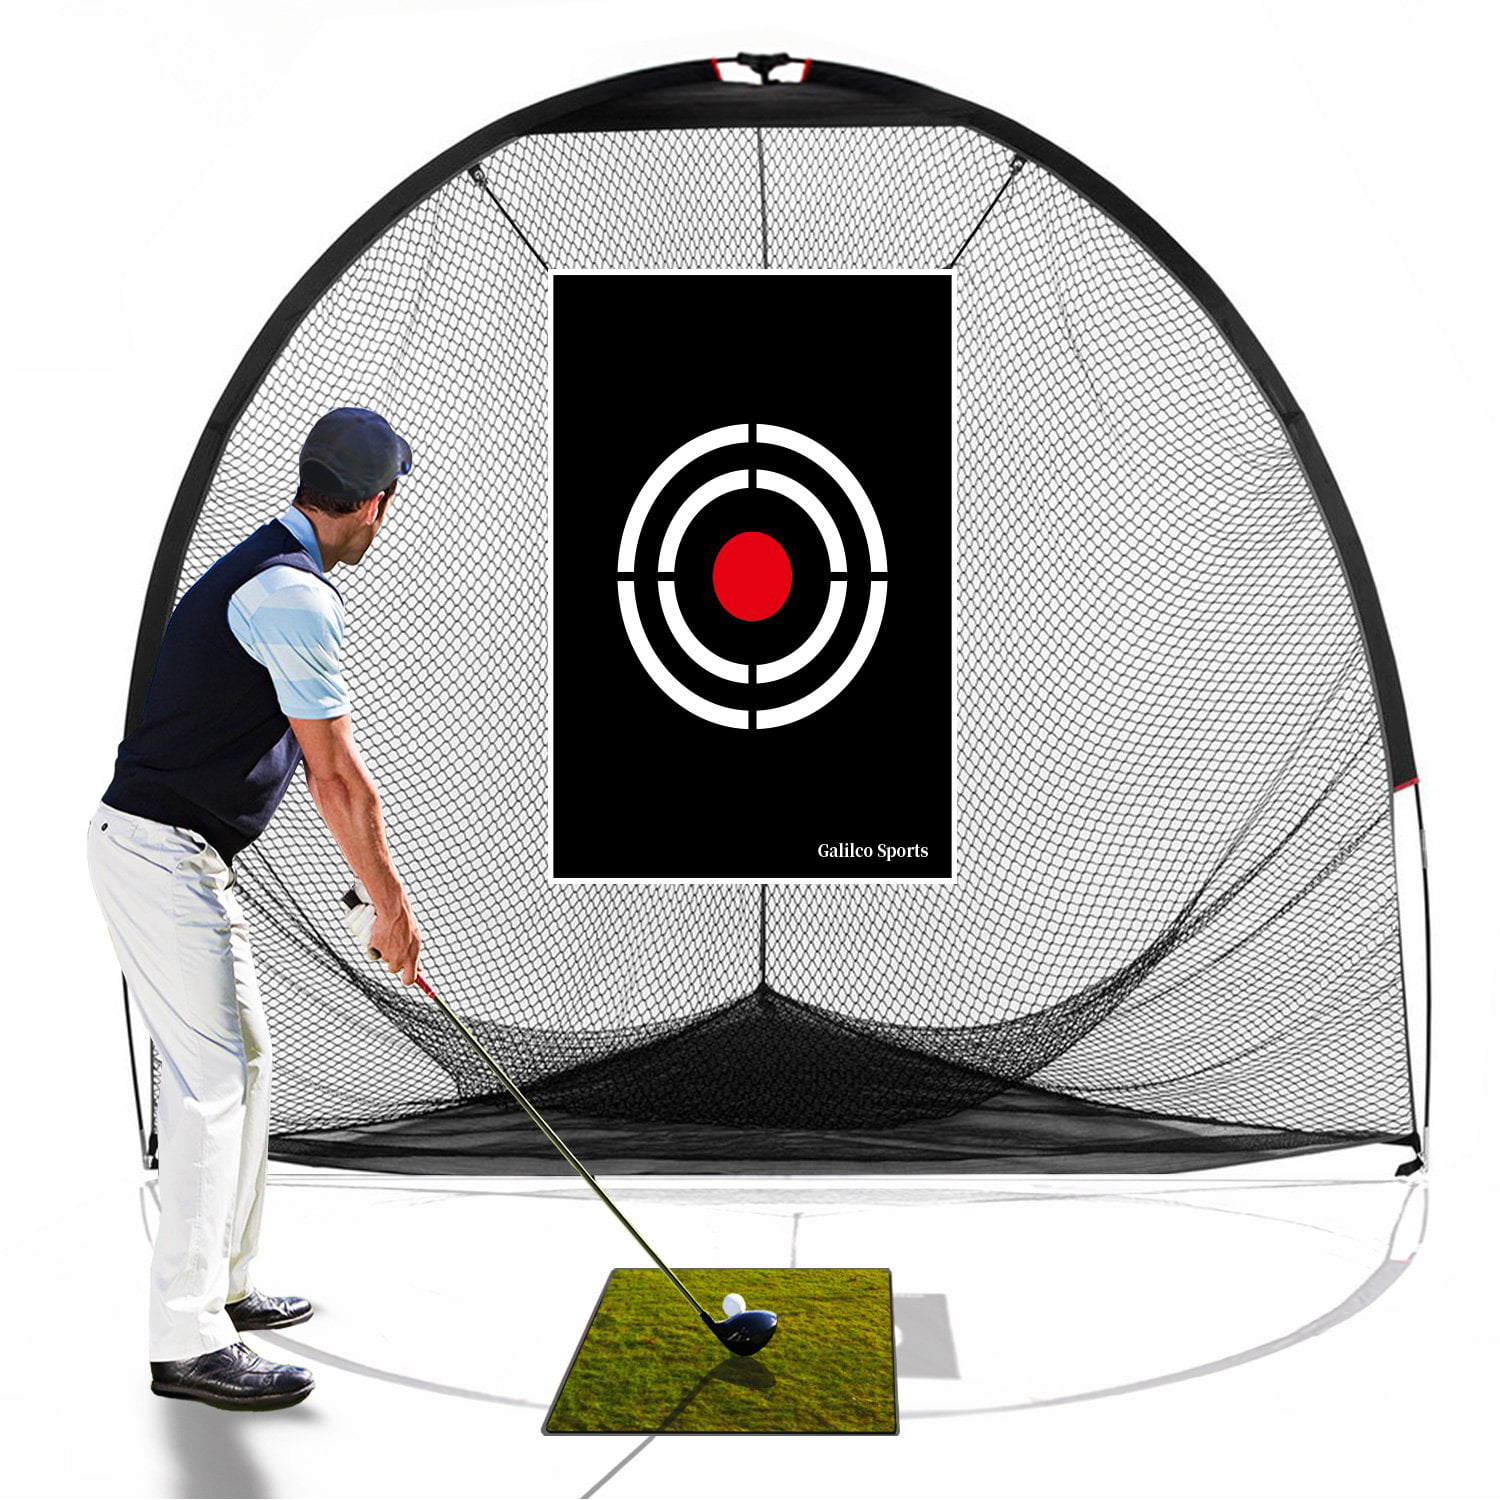 Gagalileo Home Golf Net Golf Training Aids Home Driving Range with 